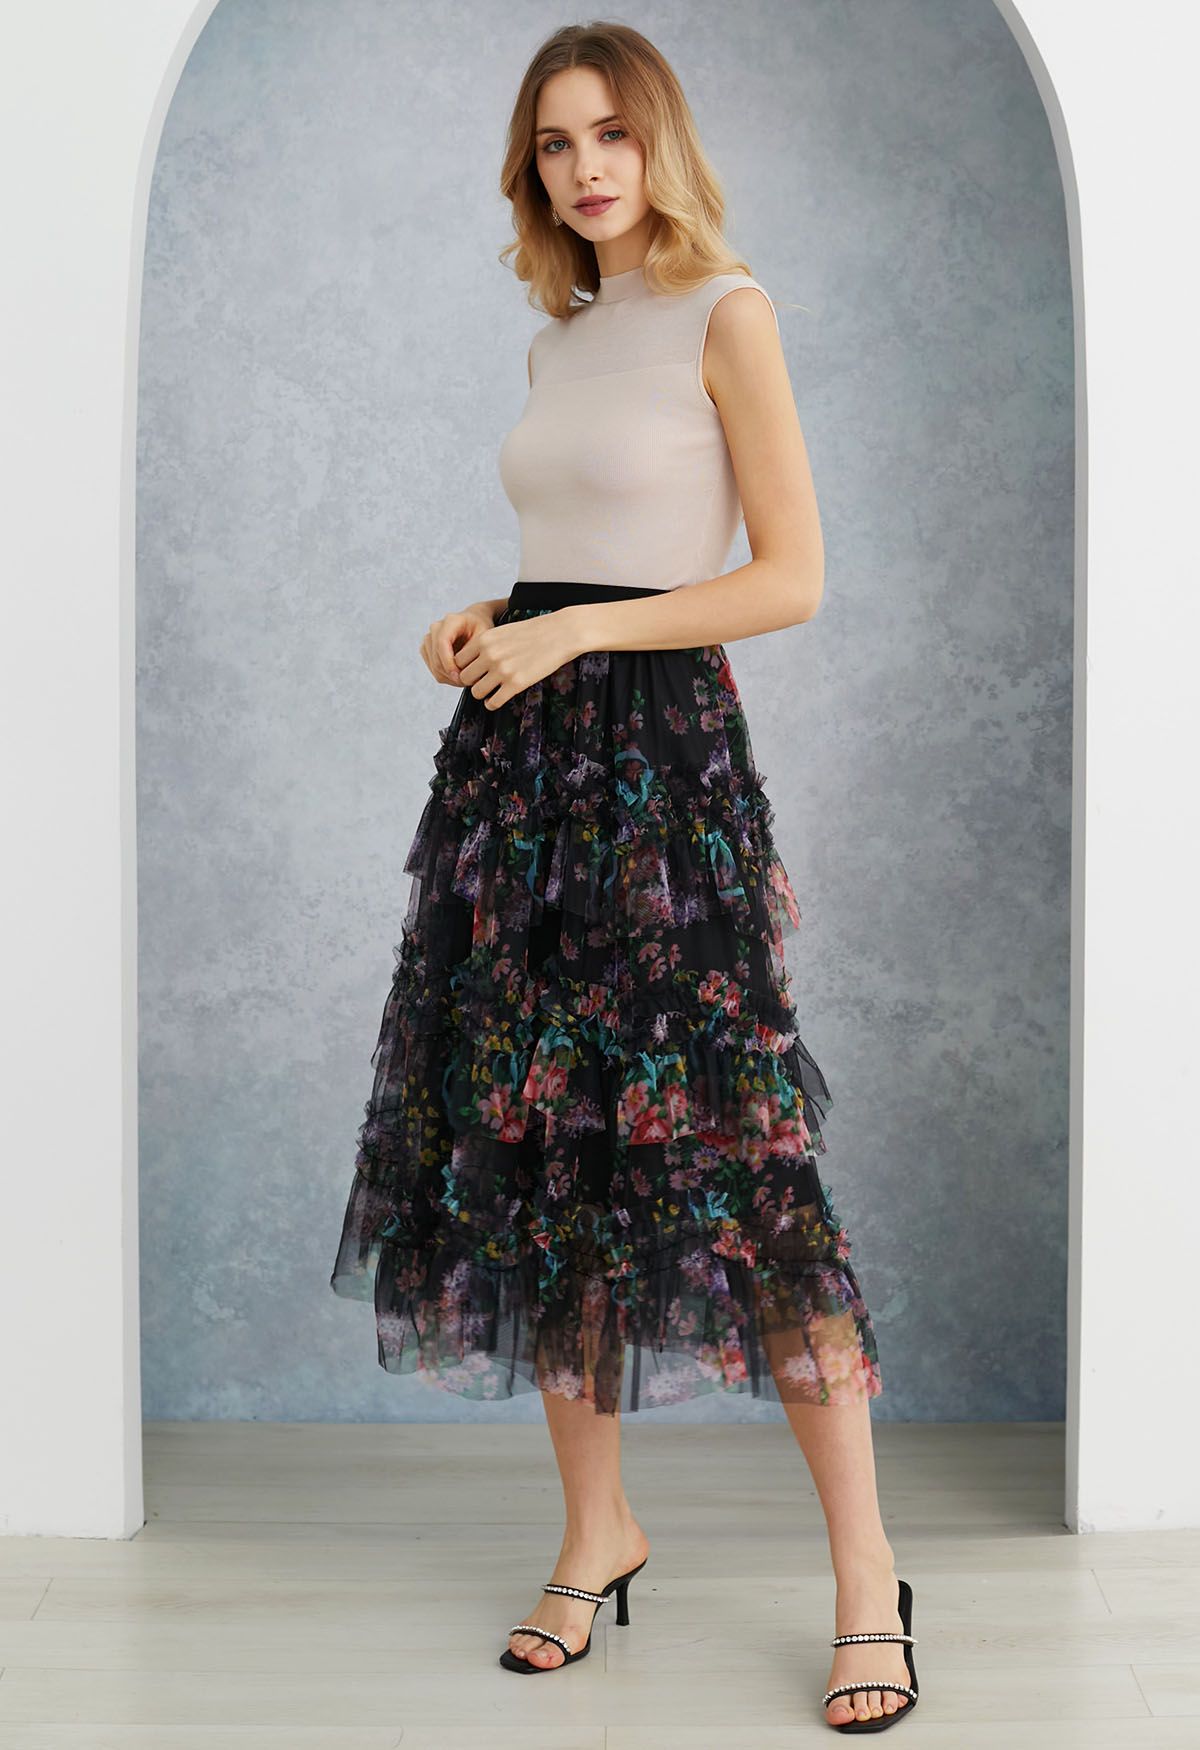 Fairy Dream Floral Ruffle Mesh Midi Skirt in Black